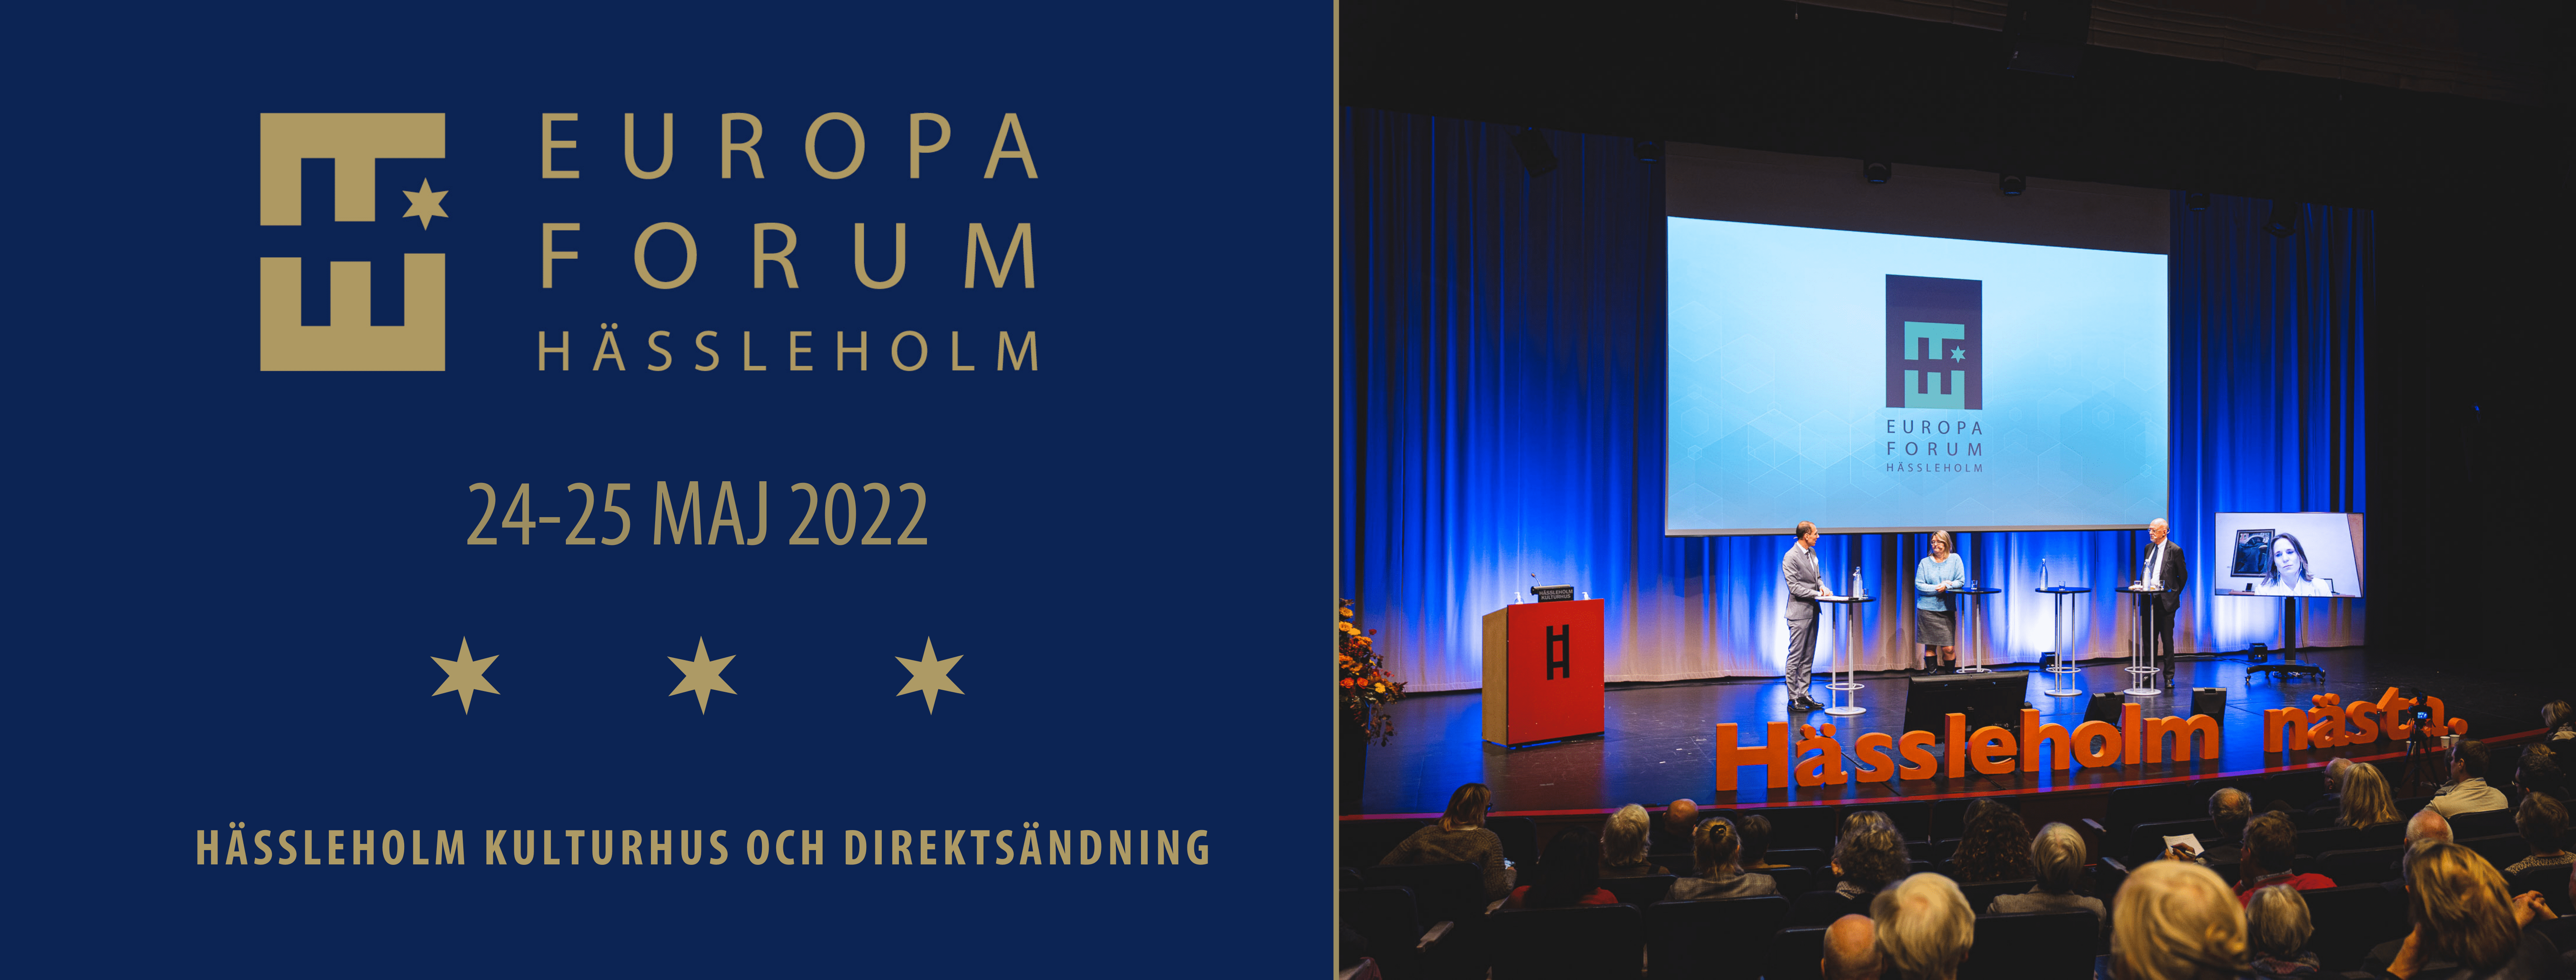 Europaforum Hässleholm 2022